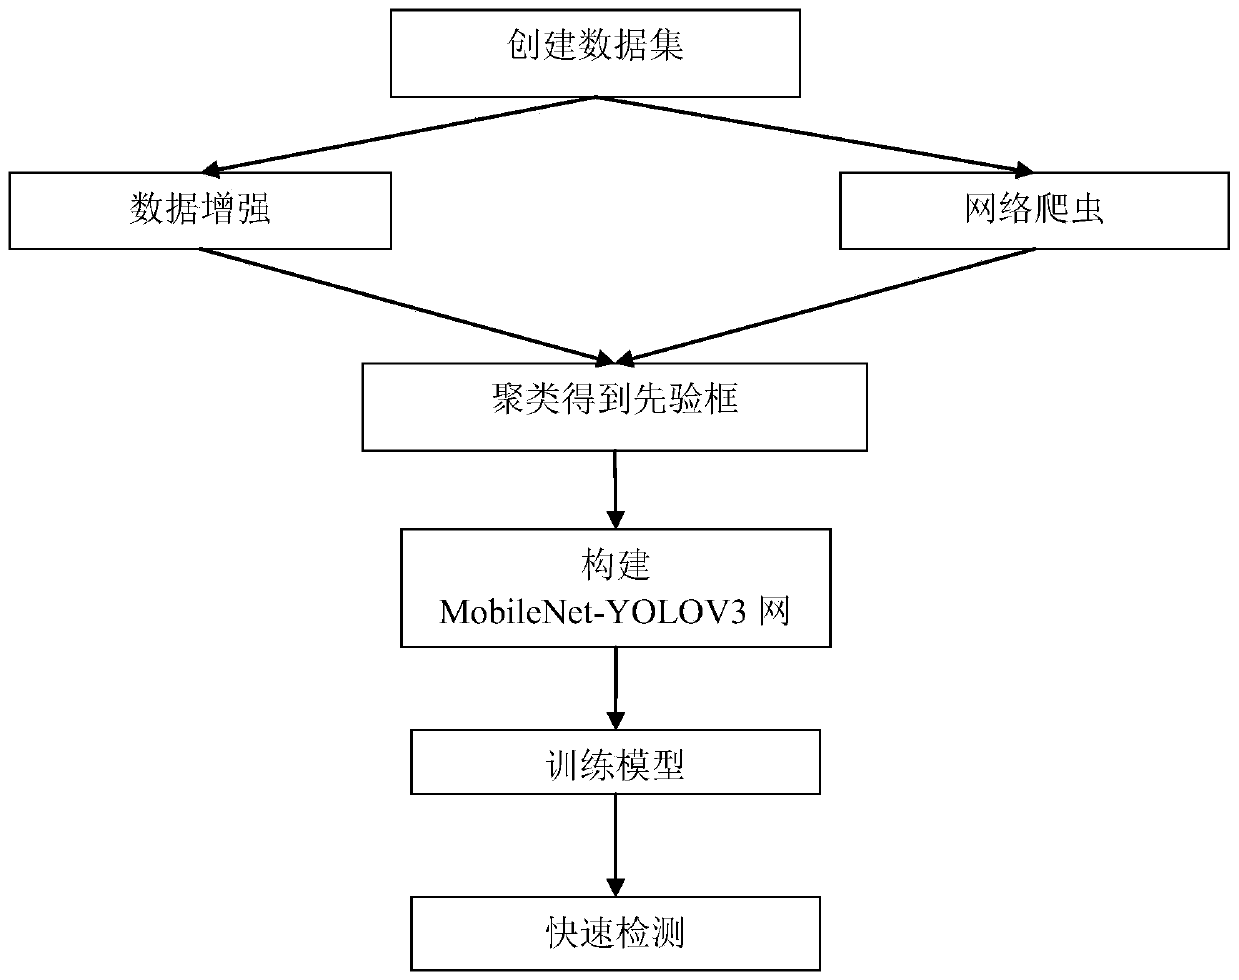 Substation pointer instrument identification method based on improved YOLOV3 model